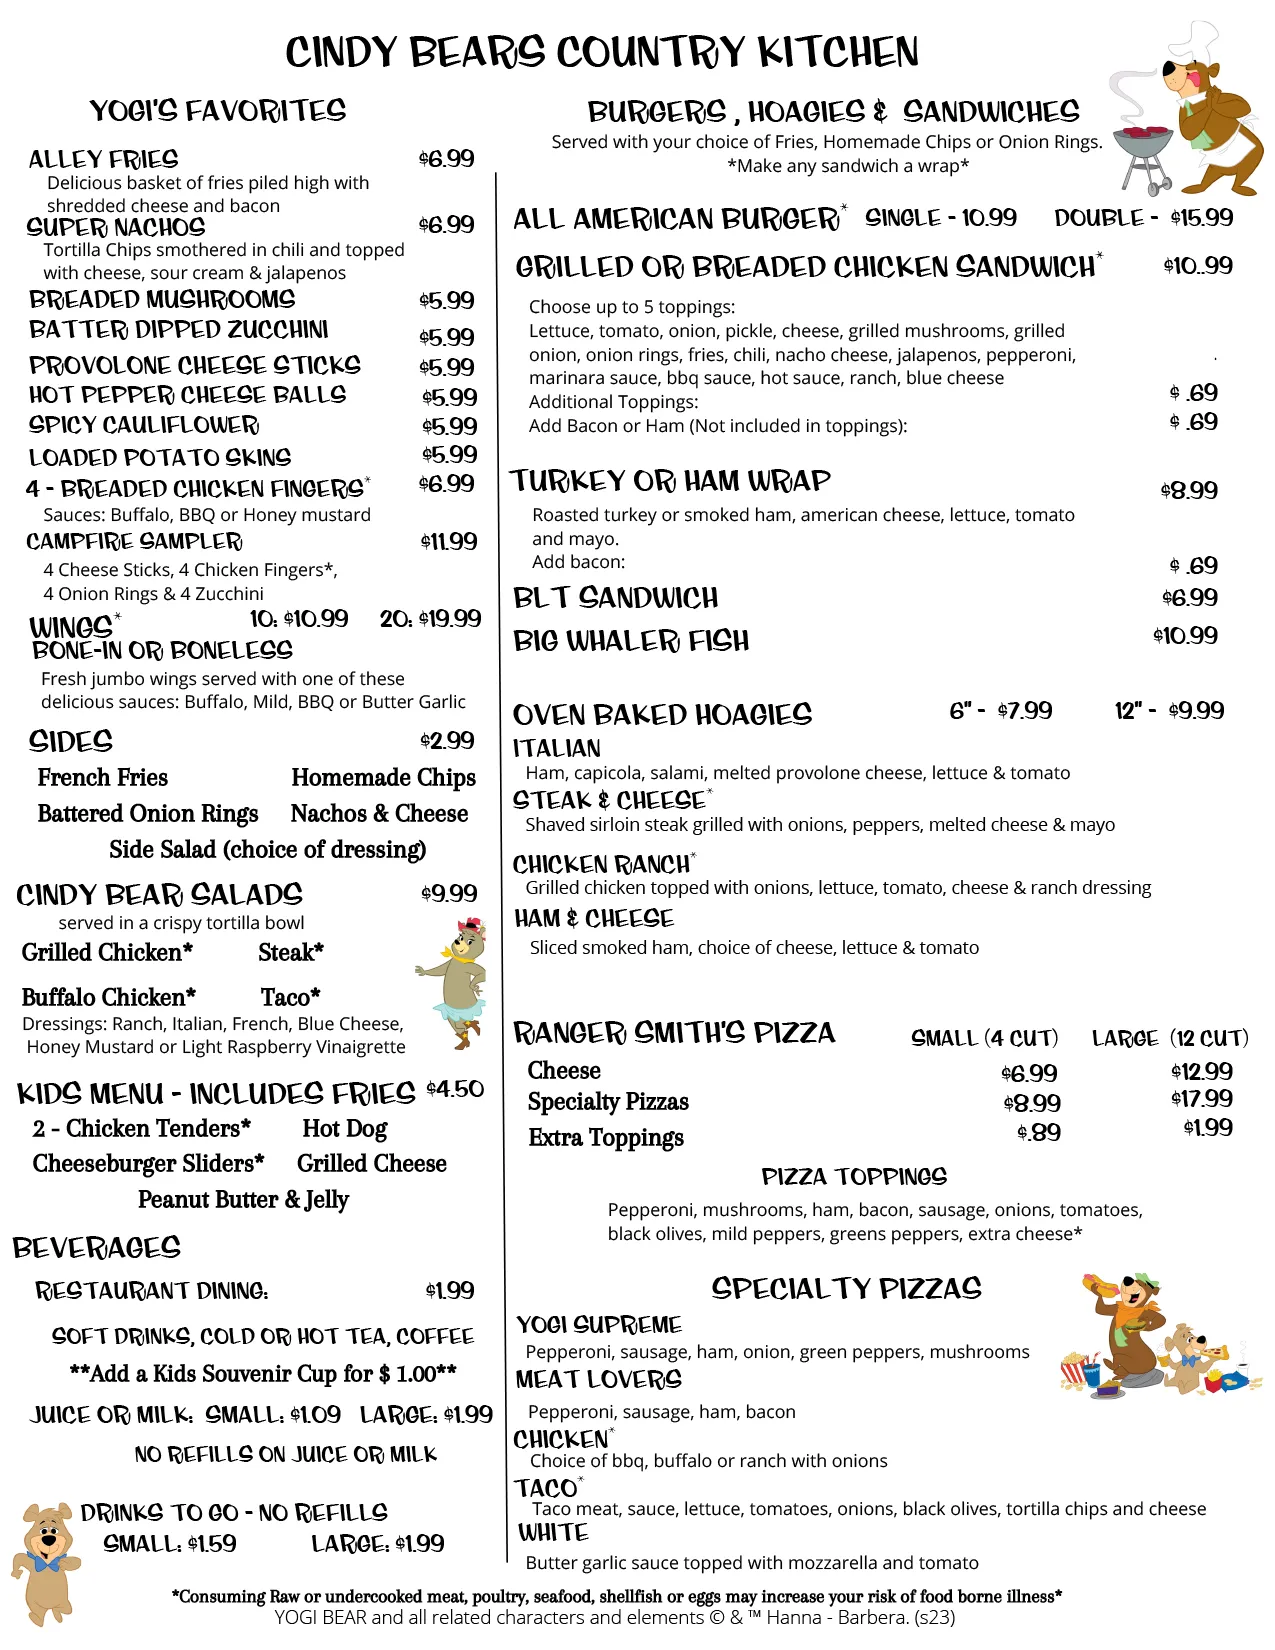 cindy bear menu - page 1